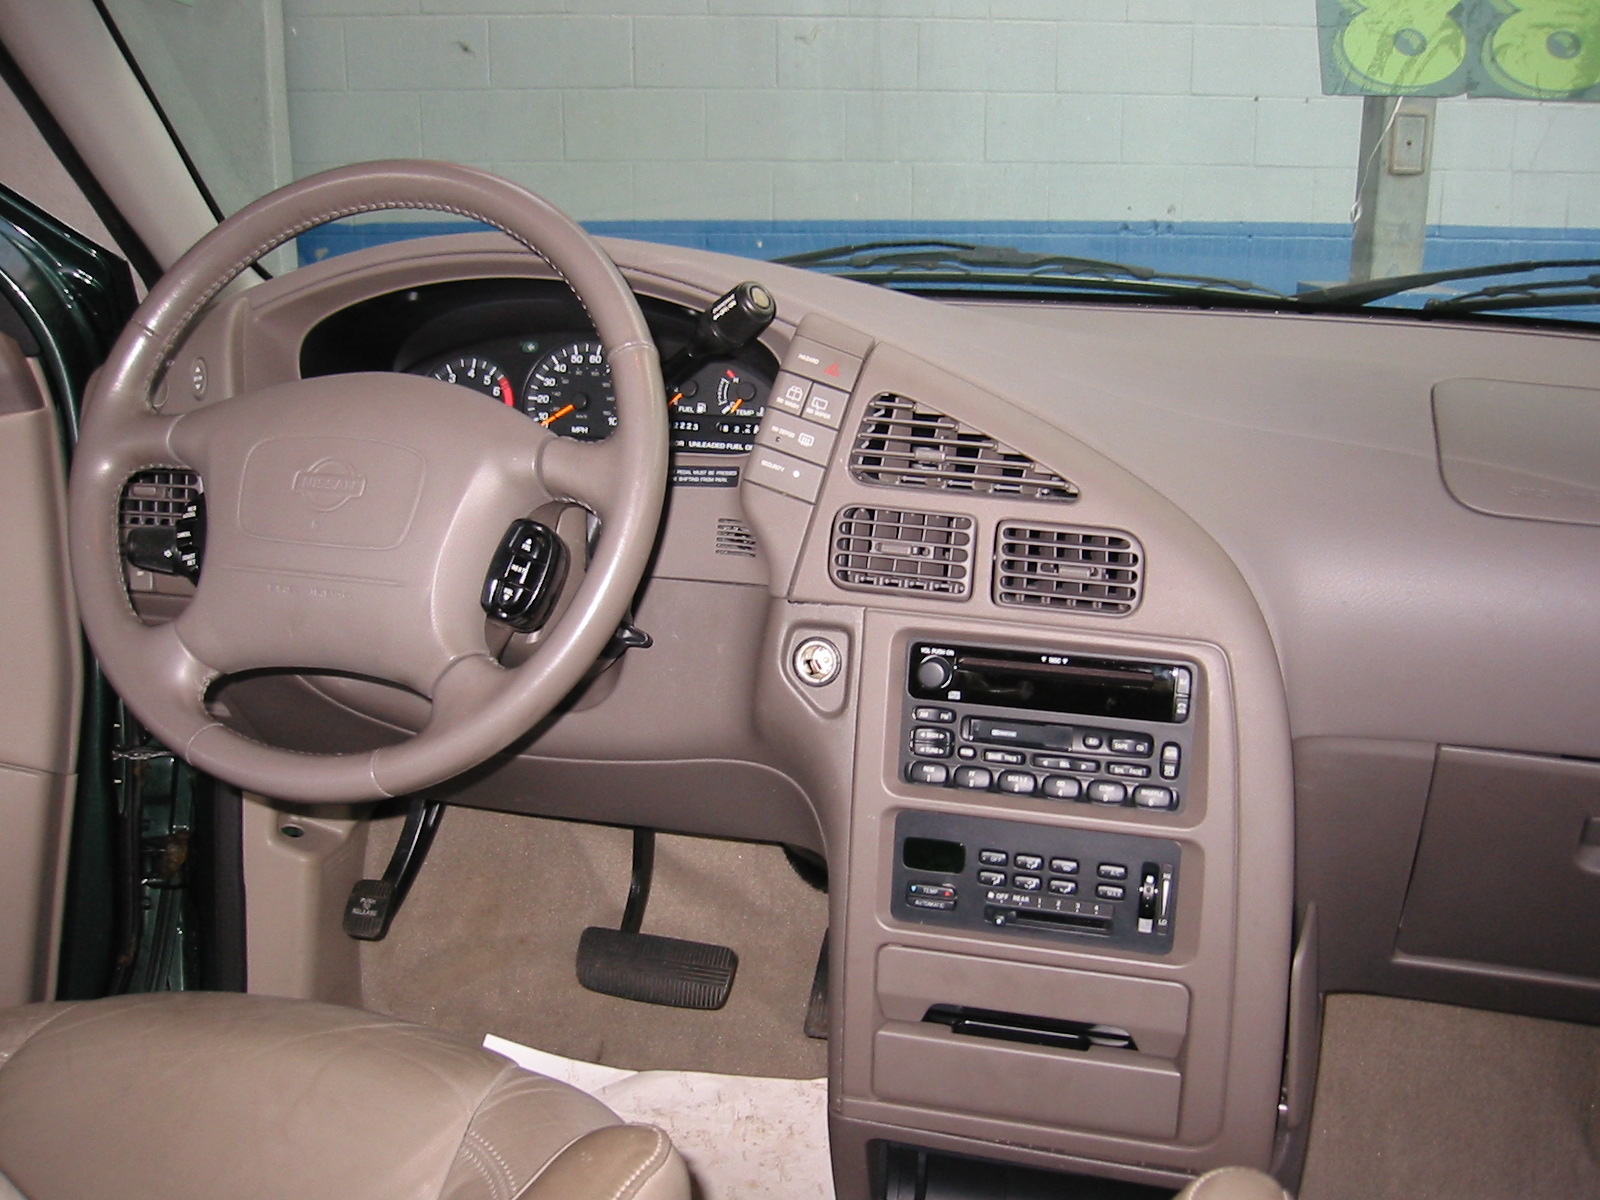 1999 Nissan quest interior photos #2